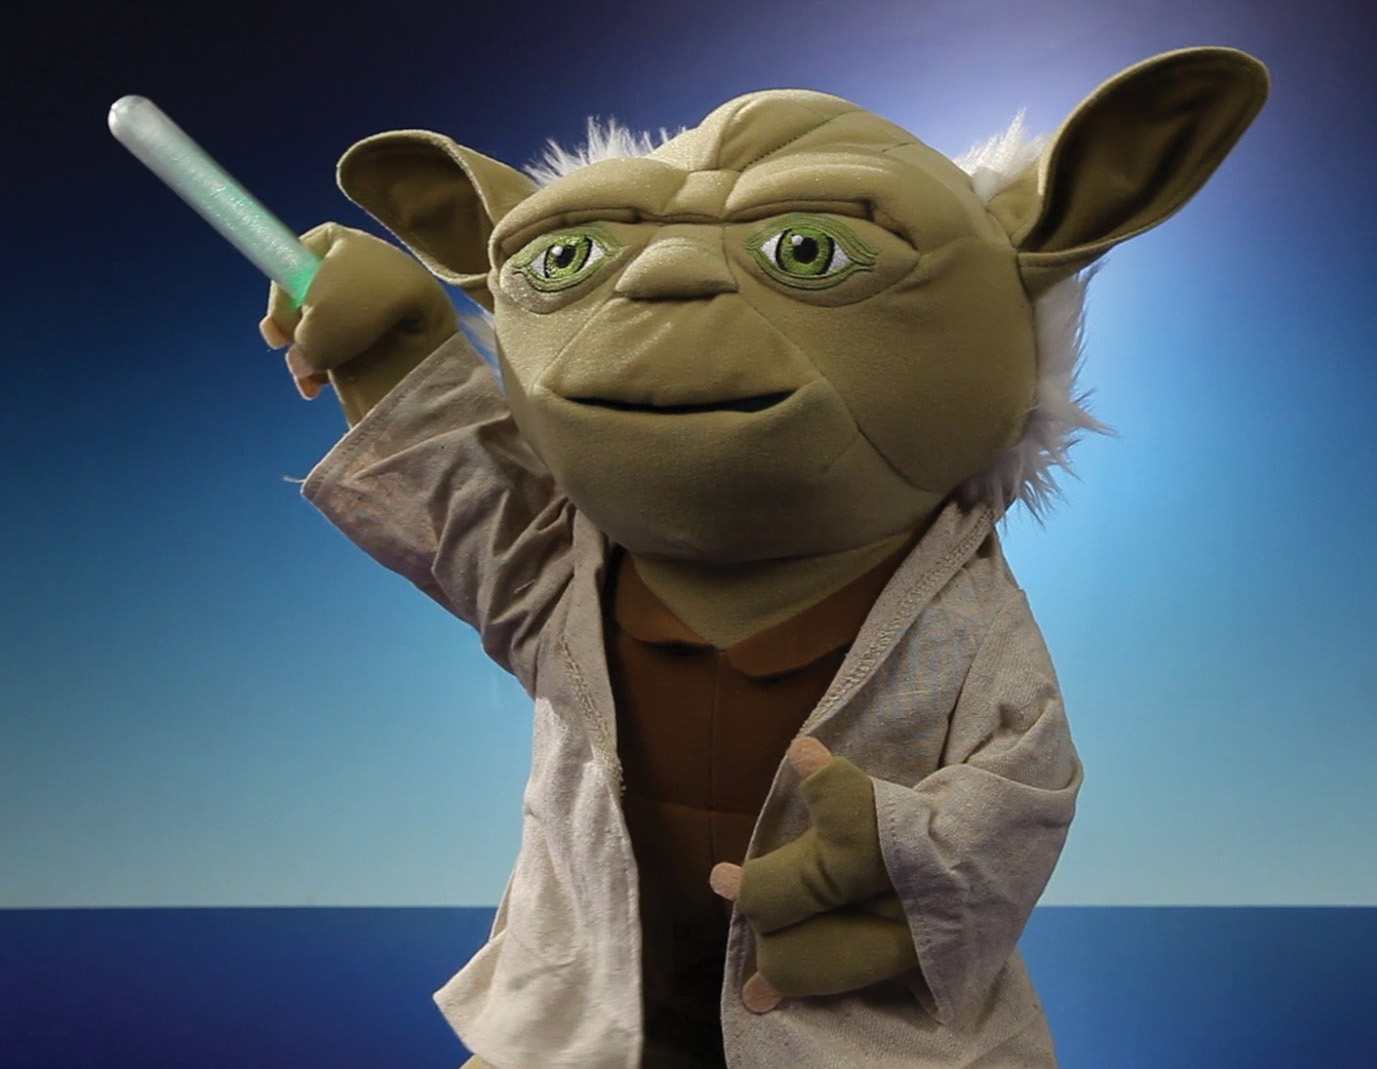 Star Wars 16-inch Lightsaber Battle Yoda Deluxe Plush 